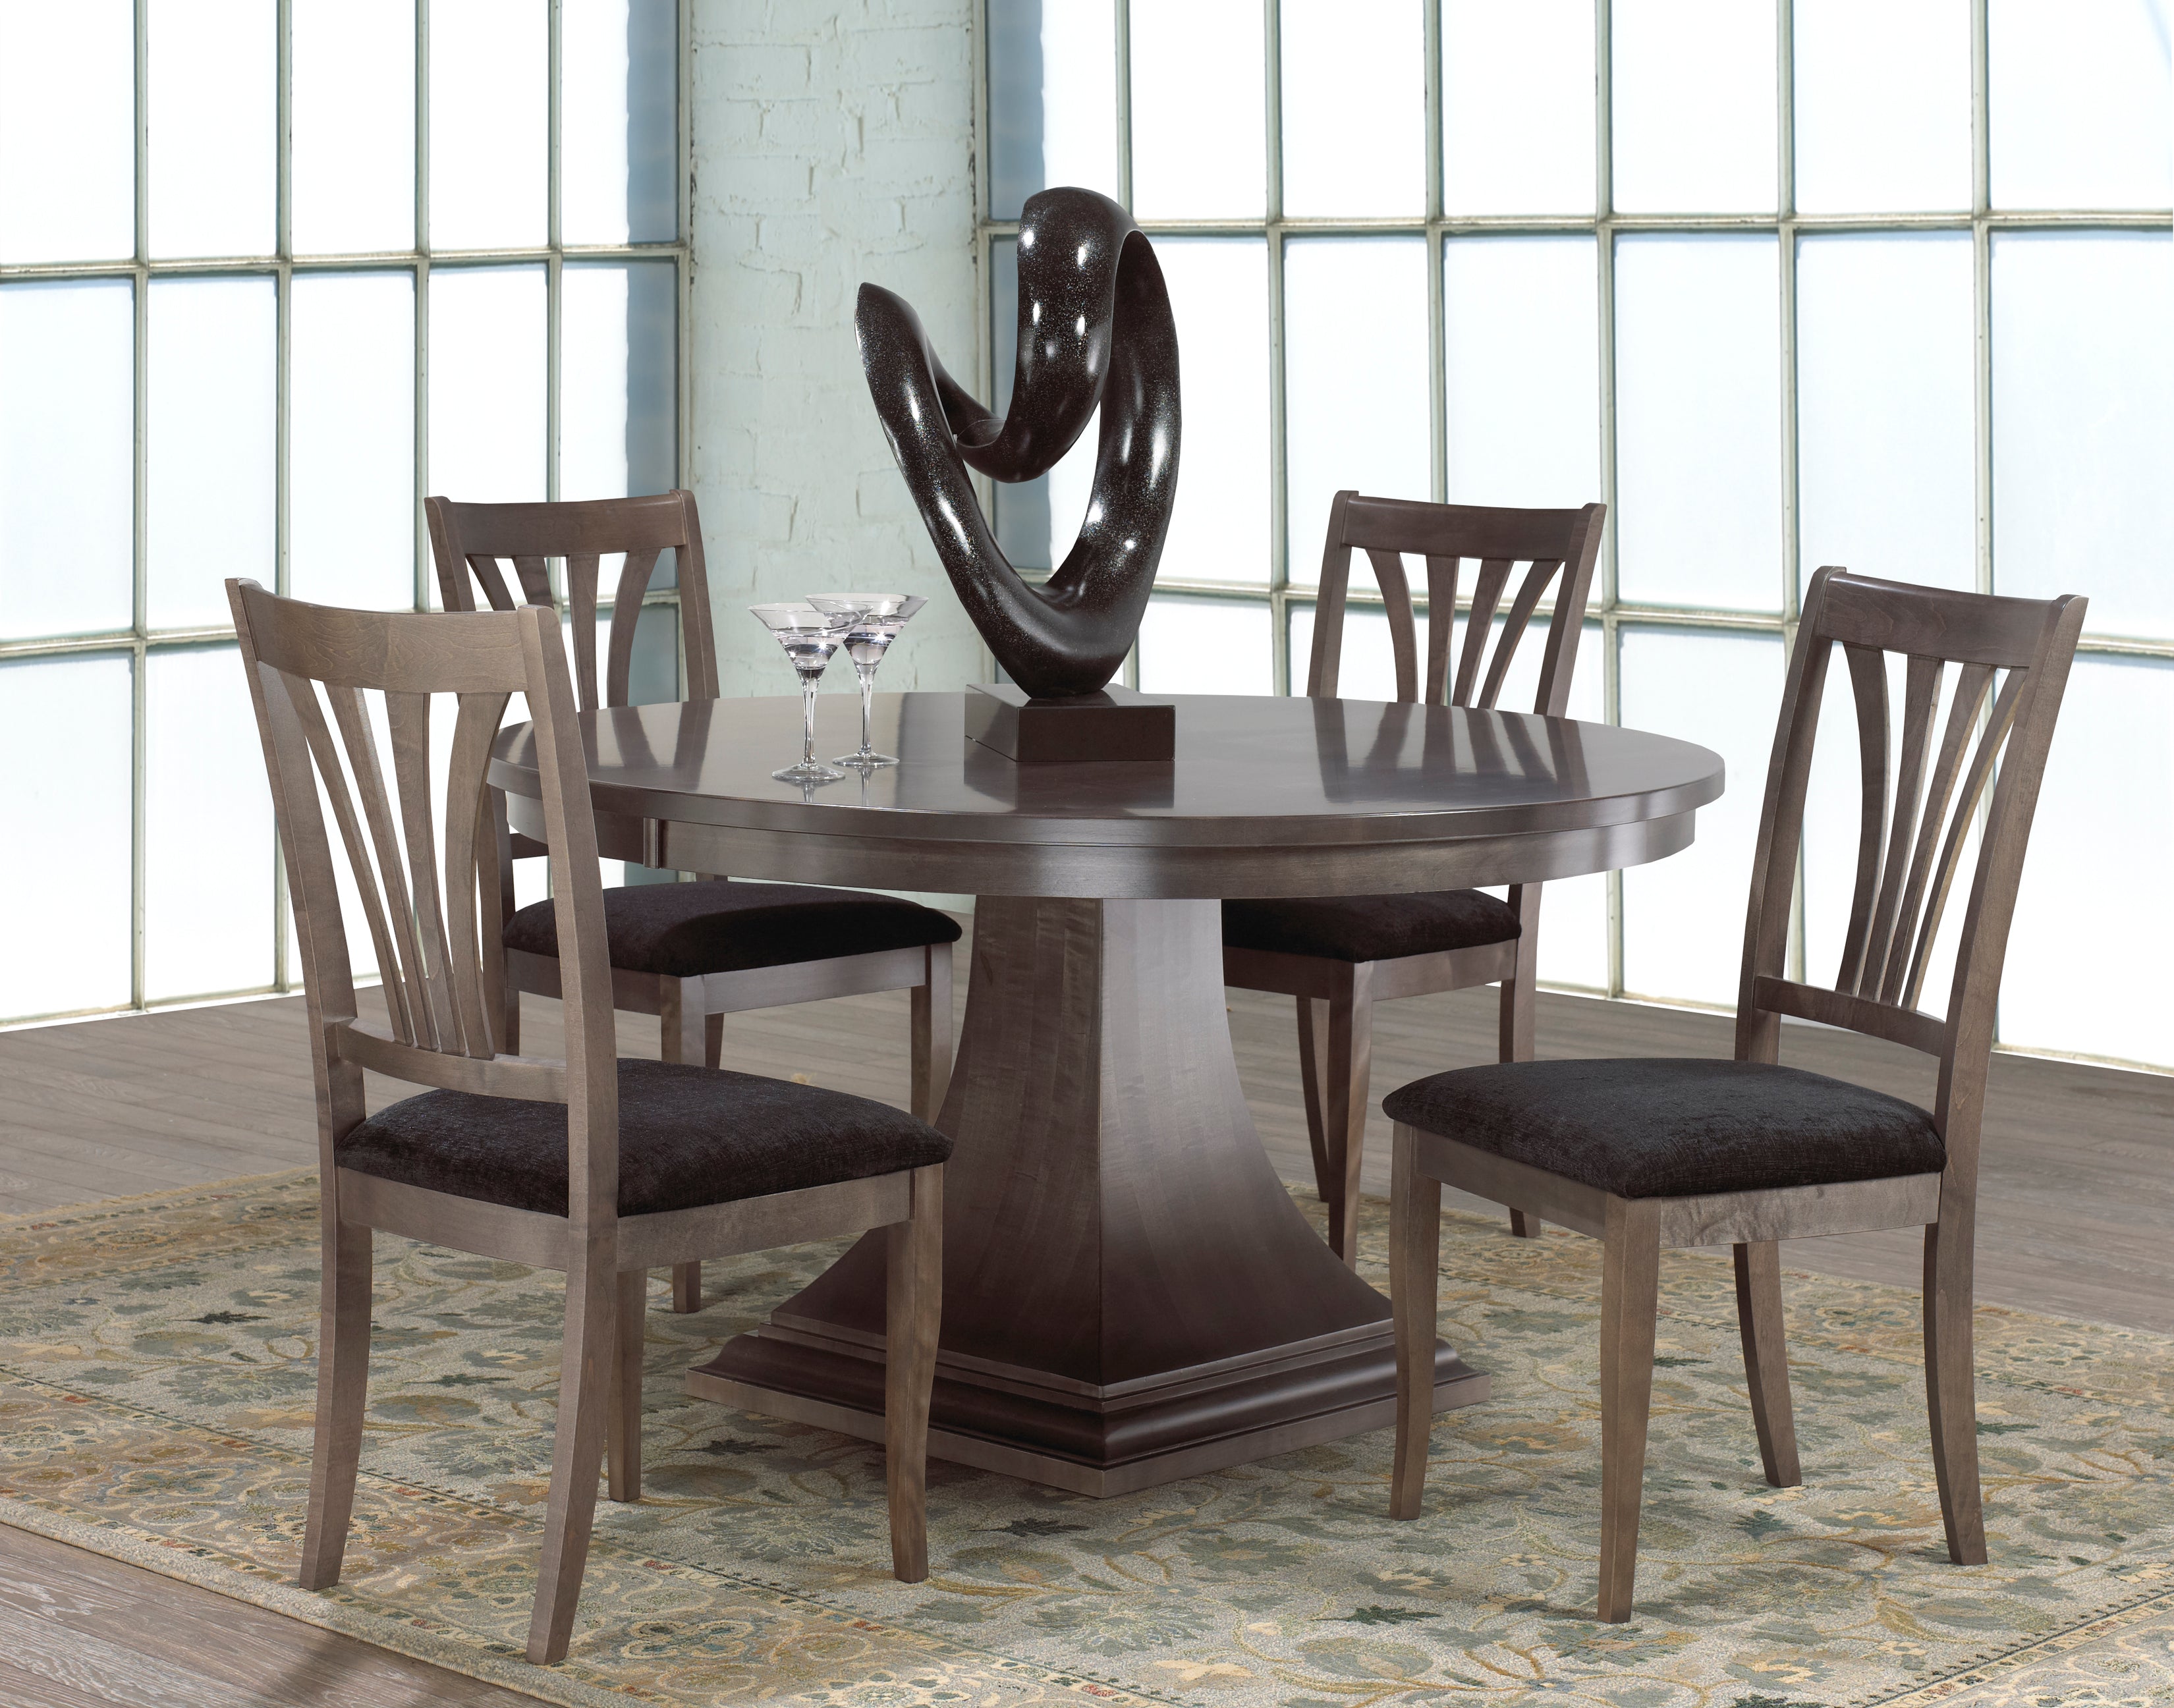 Chair as Shown | Cardinal Woodcraft Cuba Dining Chair | Valley Ridge Furniture